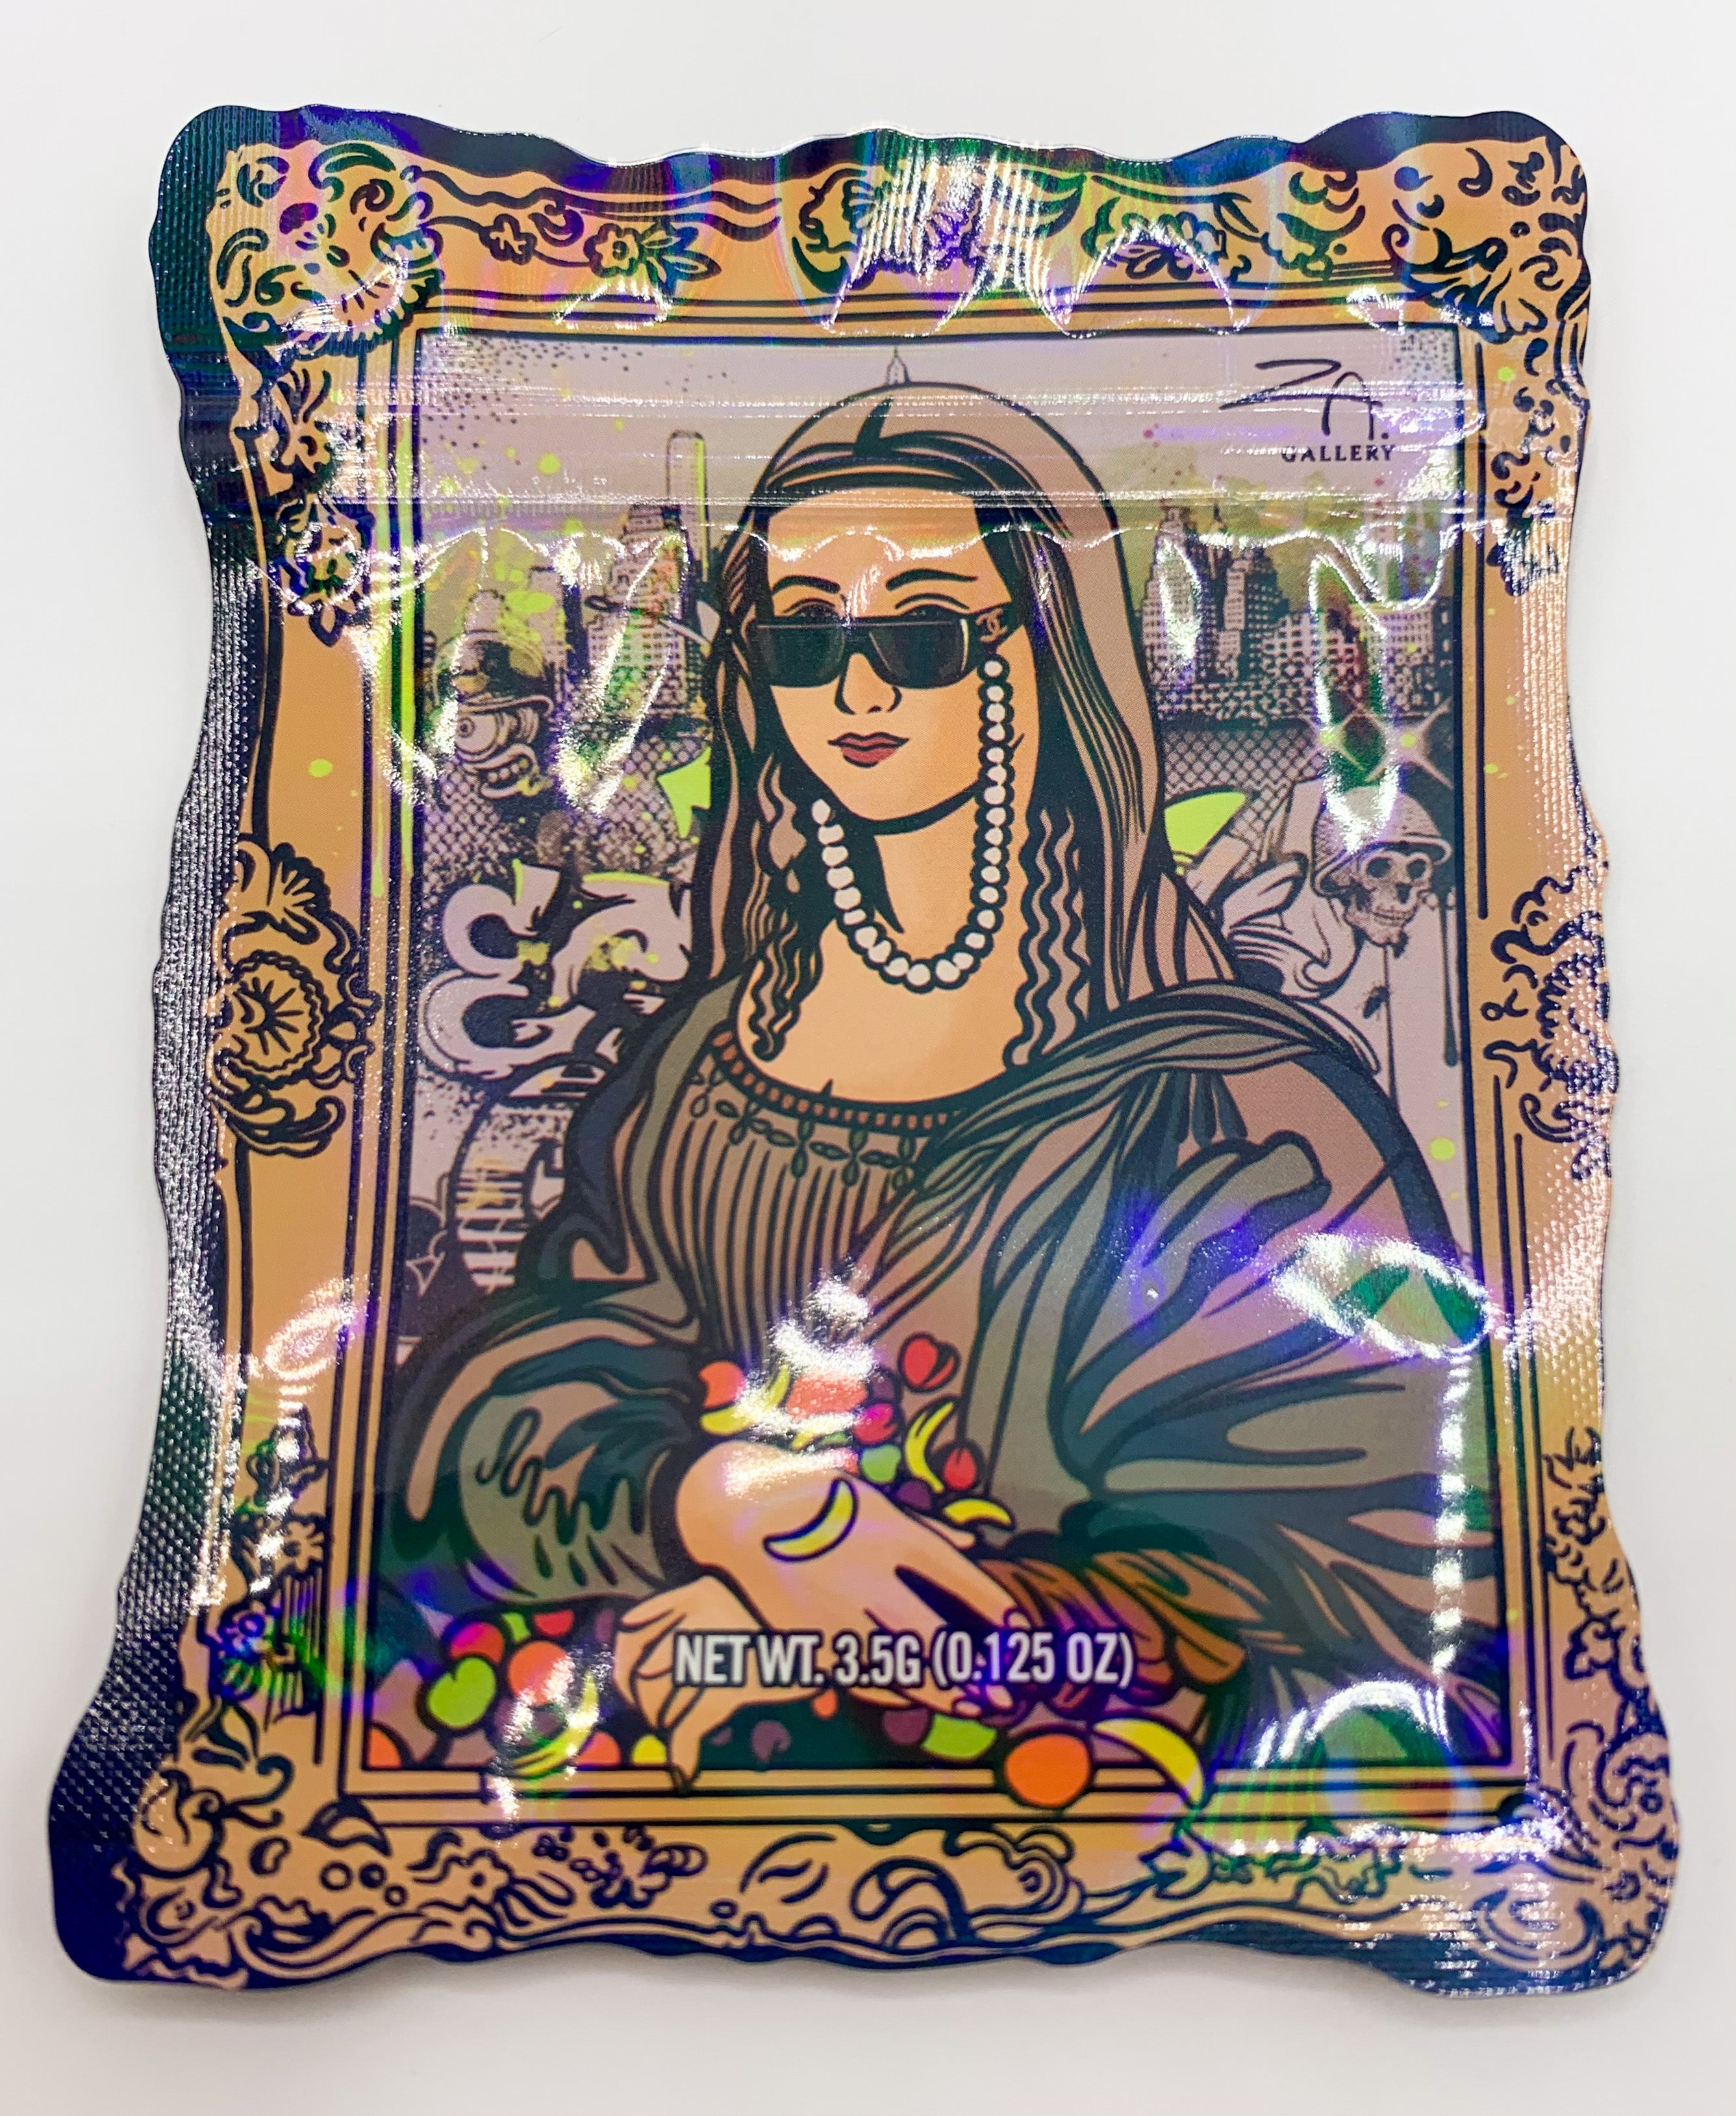 3D ZA Gallery Mona Lisa Runtz 3.5g Mylar Bags